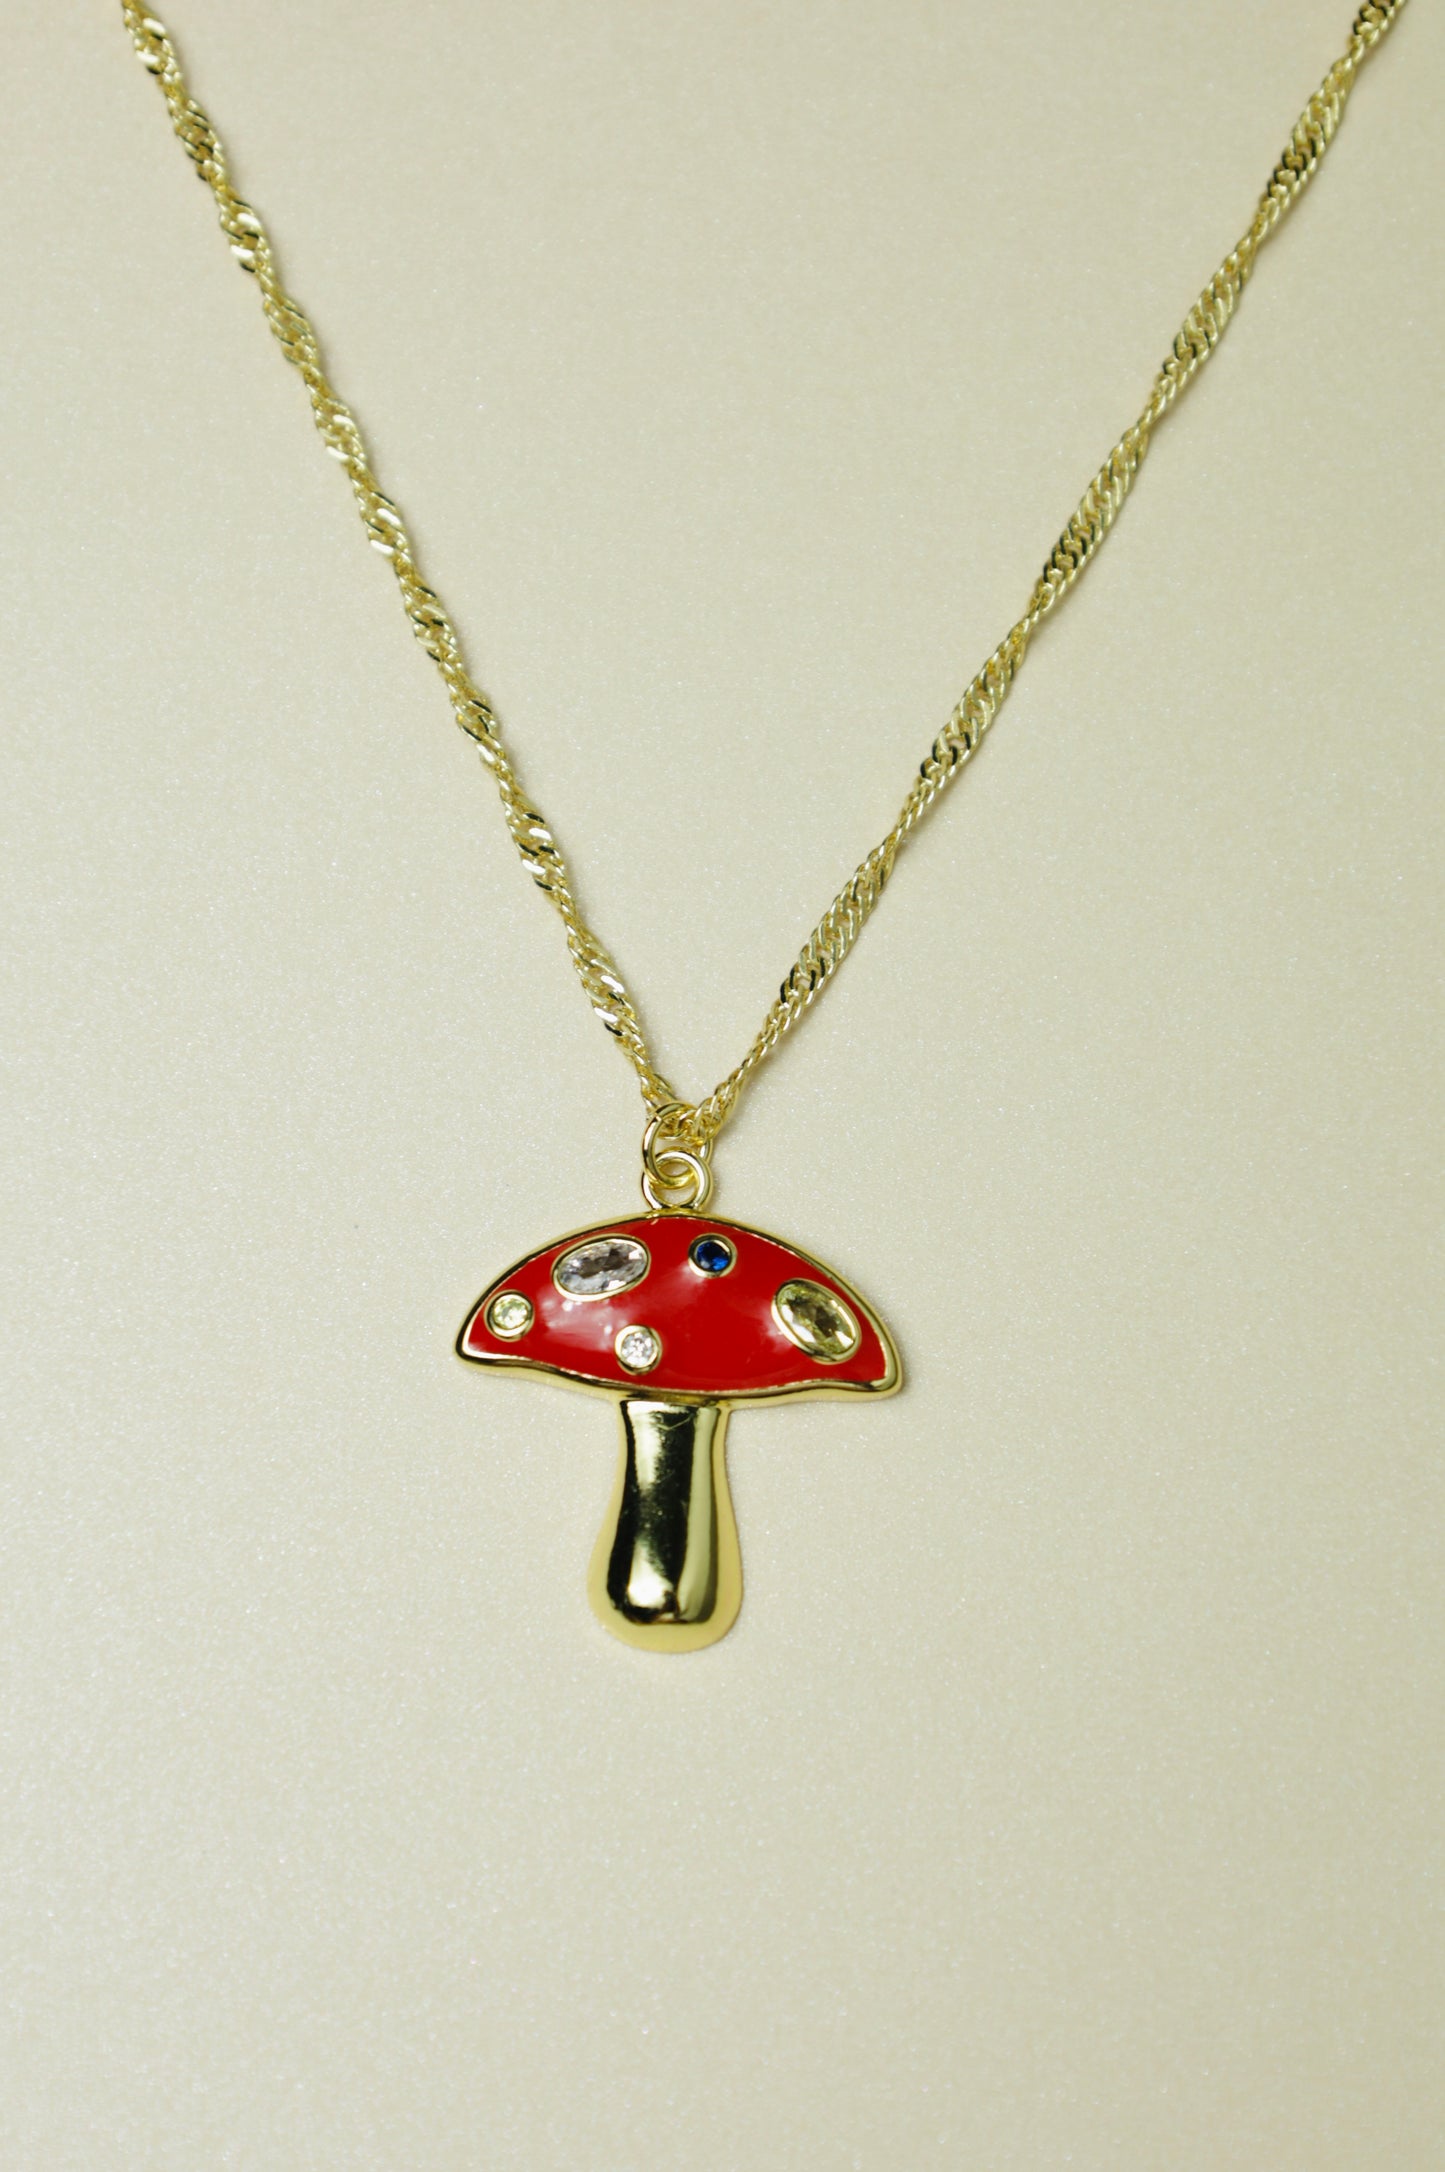 Imagine mushroom necklace